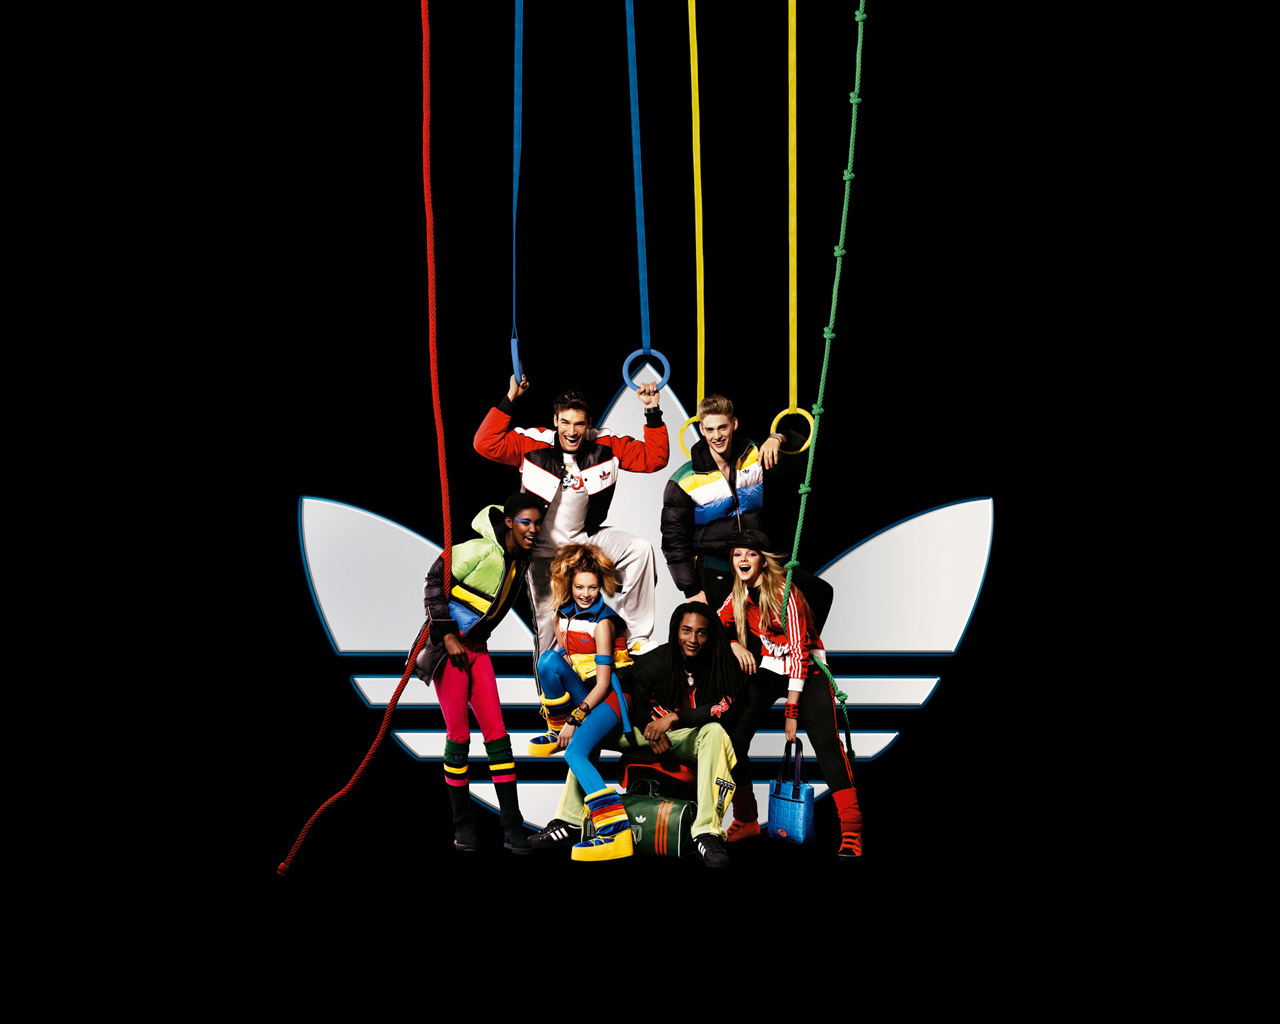 Previous, Brands - Adidas wallpaper